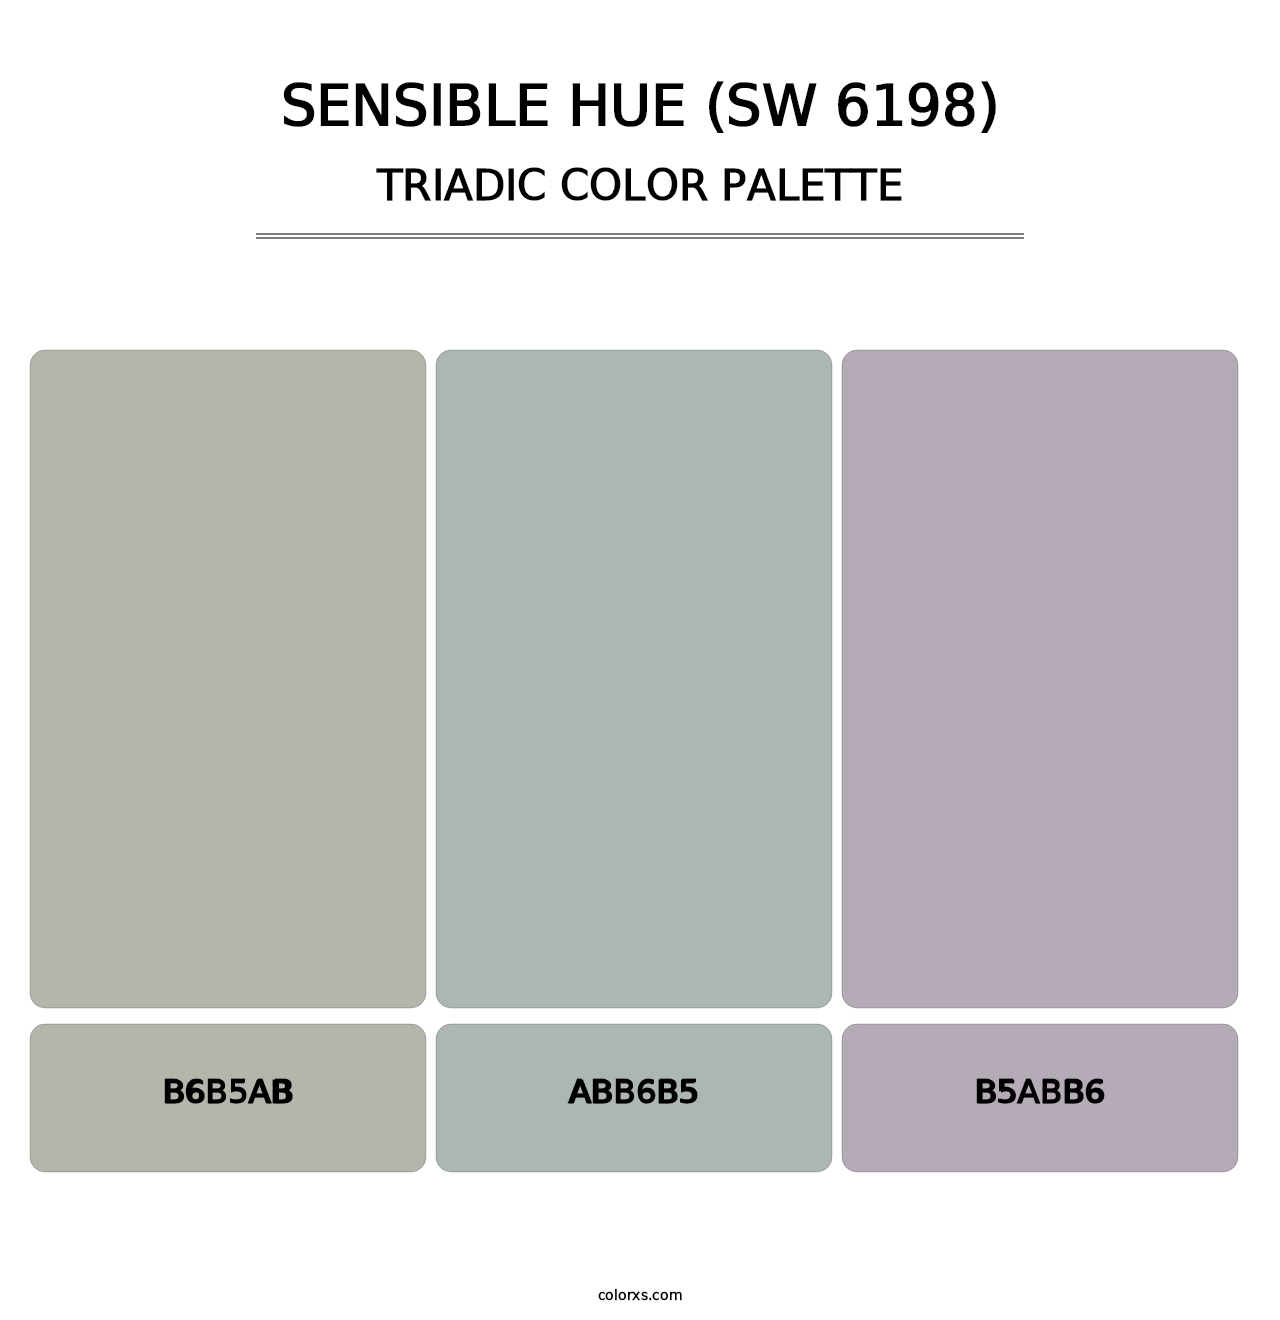 Sensible Hue (SW 6198) - Triadic Color Palette